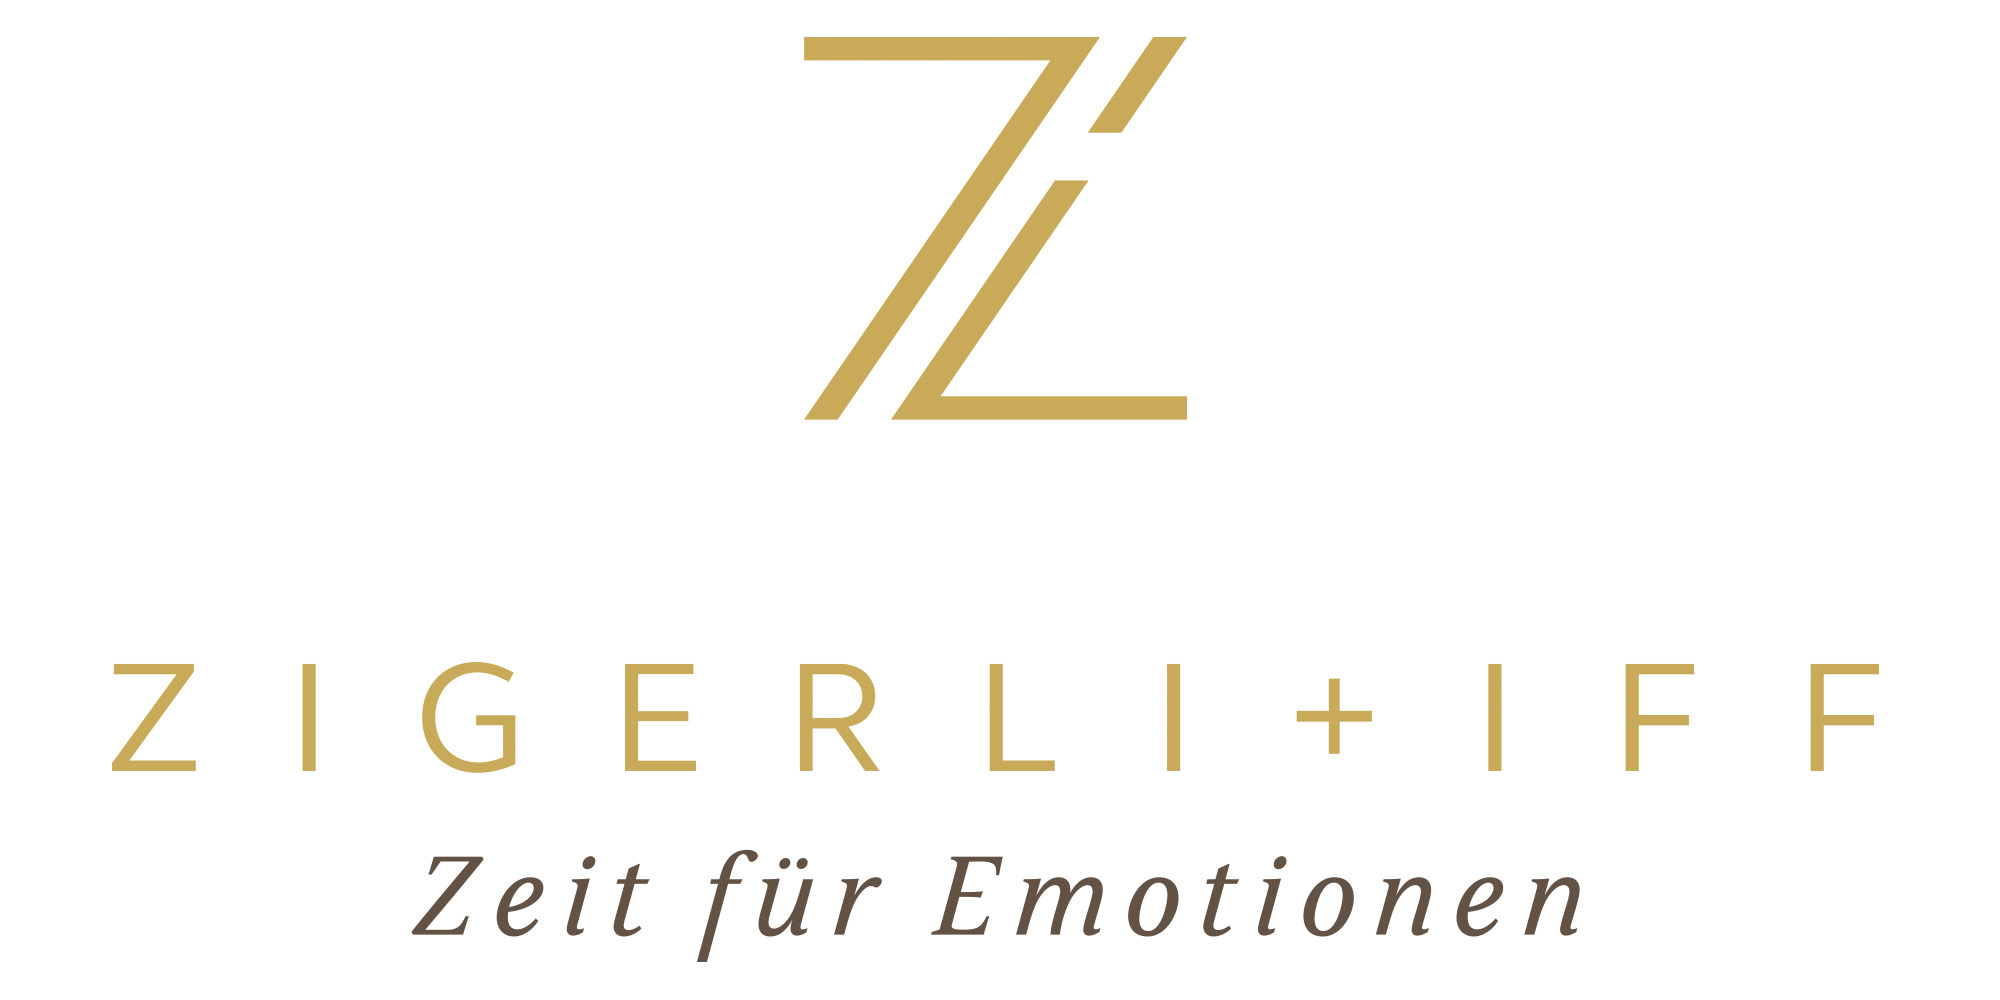 Zigerli+Iff